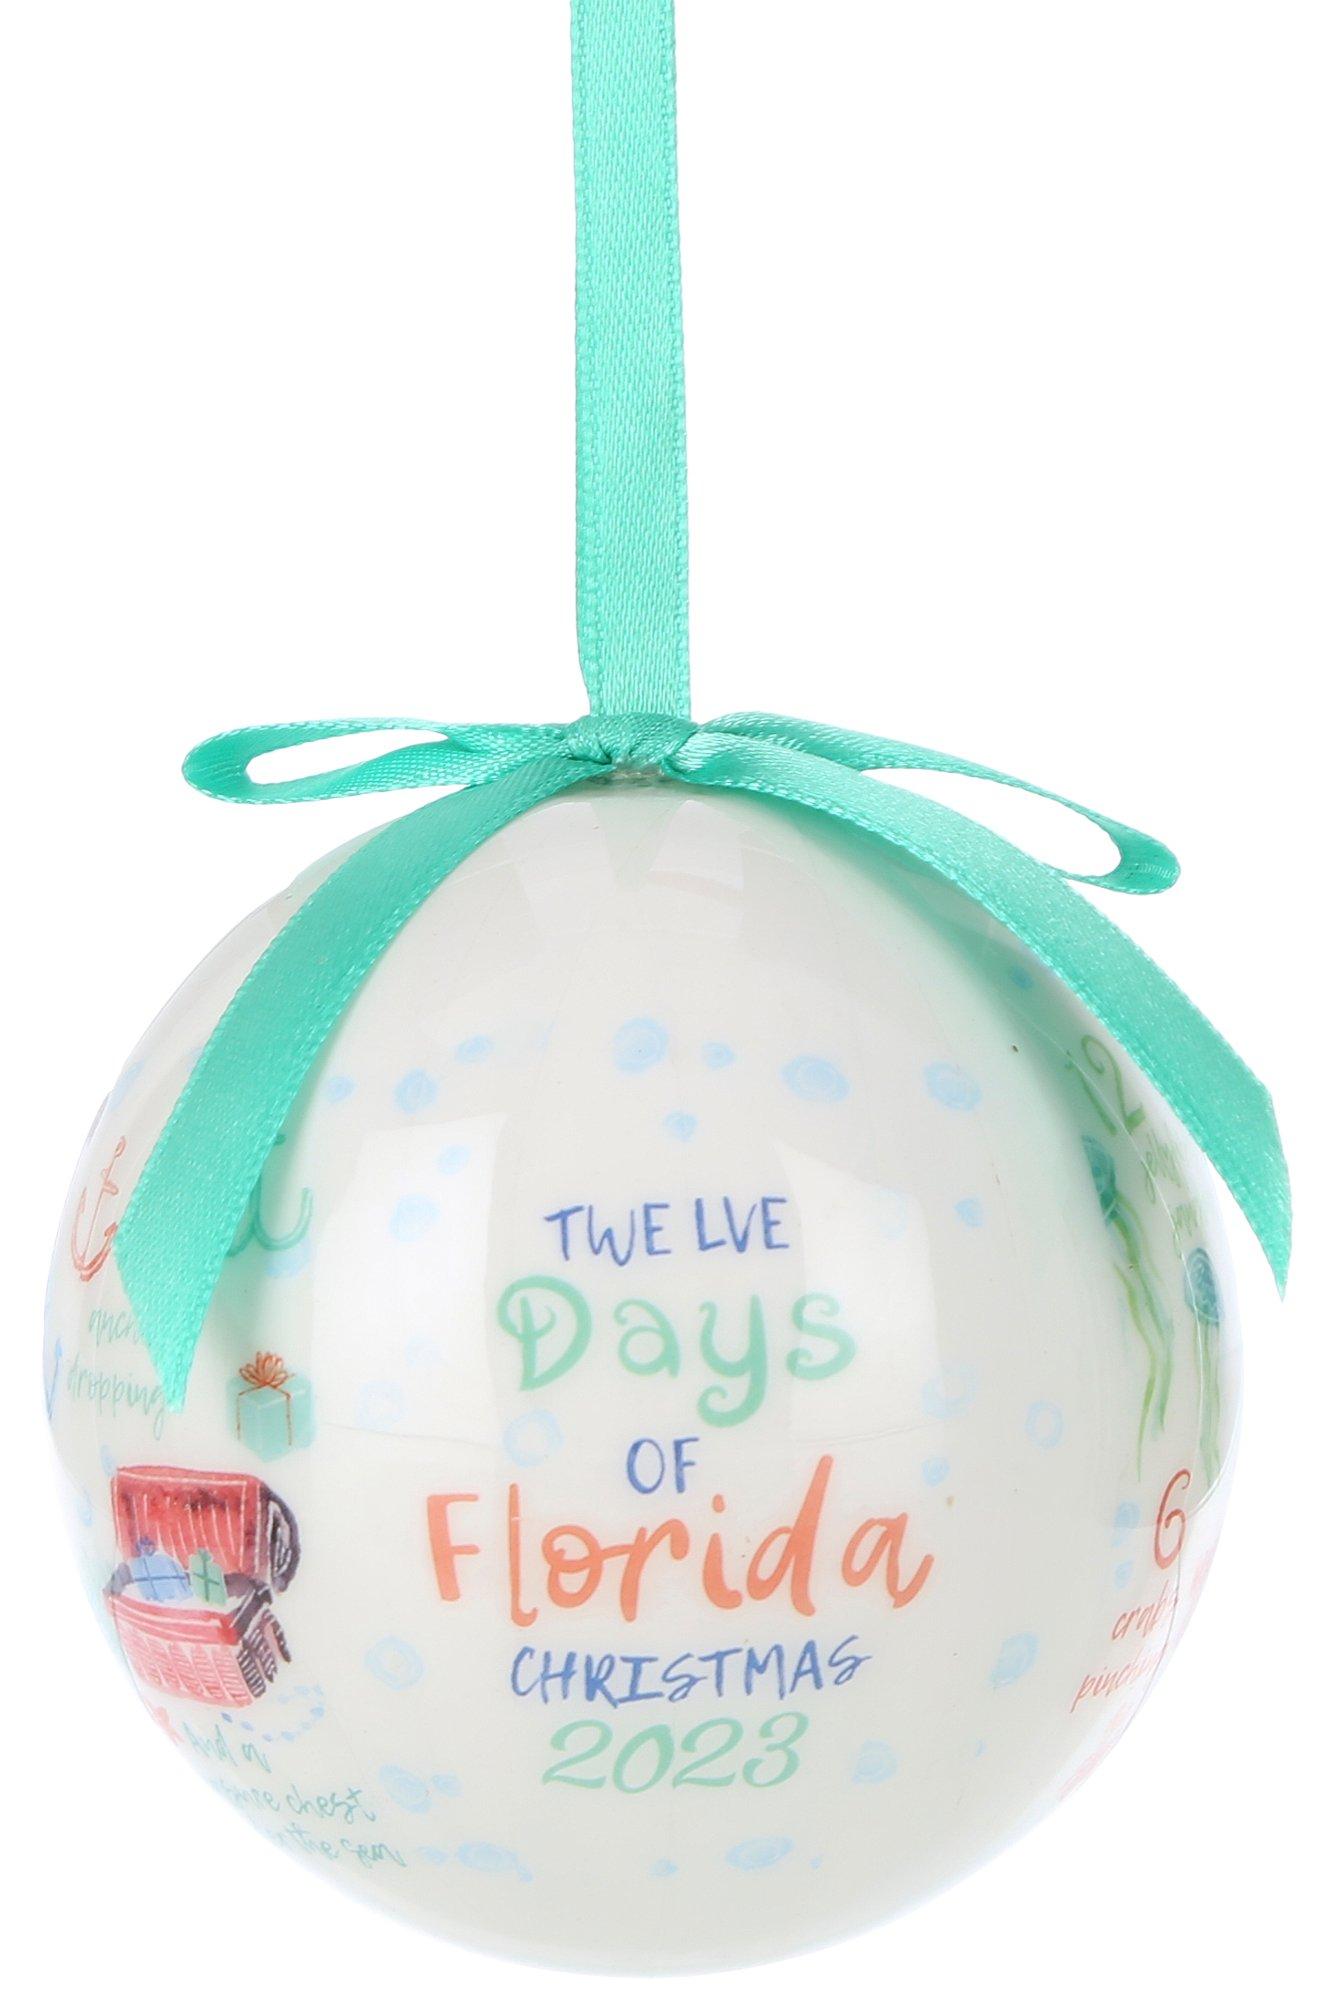 https://images.beallsflorida.com/i/beallsflorida/689-0739-6016-00-yyy/*12-Days-Of-Florida-Christmas-2023-Christmas-Ornament*?$product$&fmt=auto&qlt=default